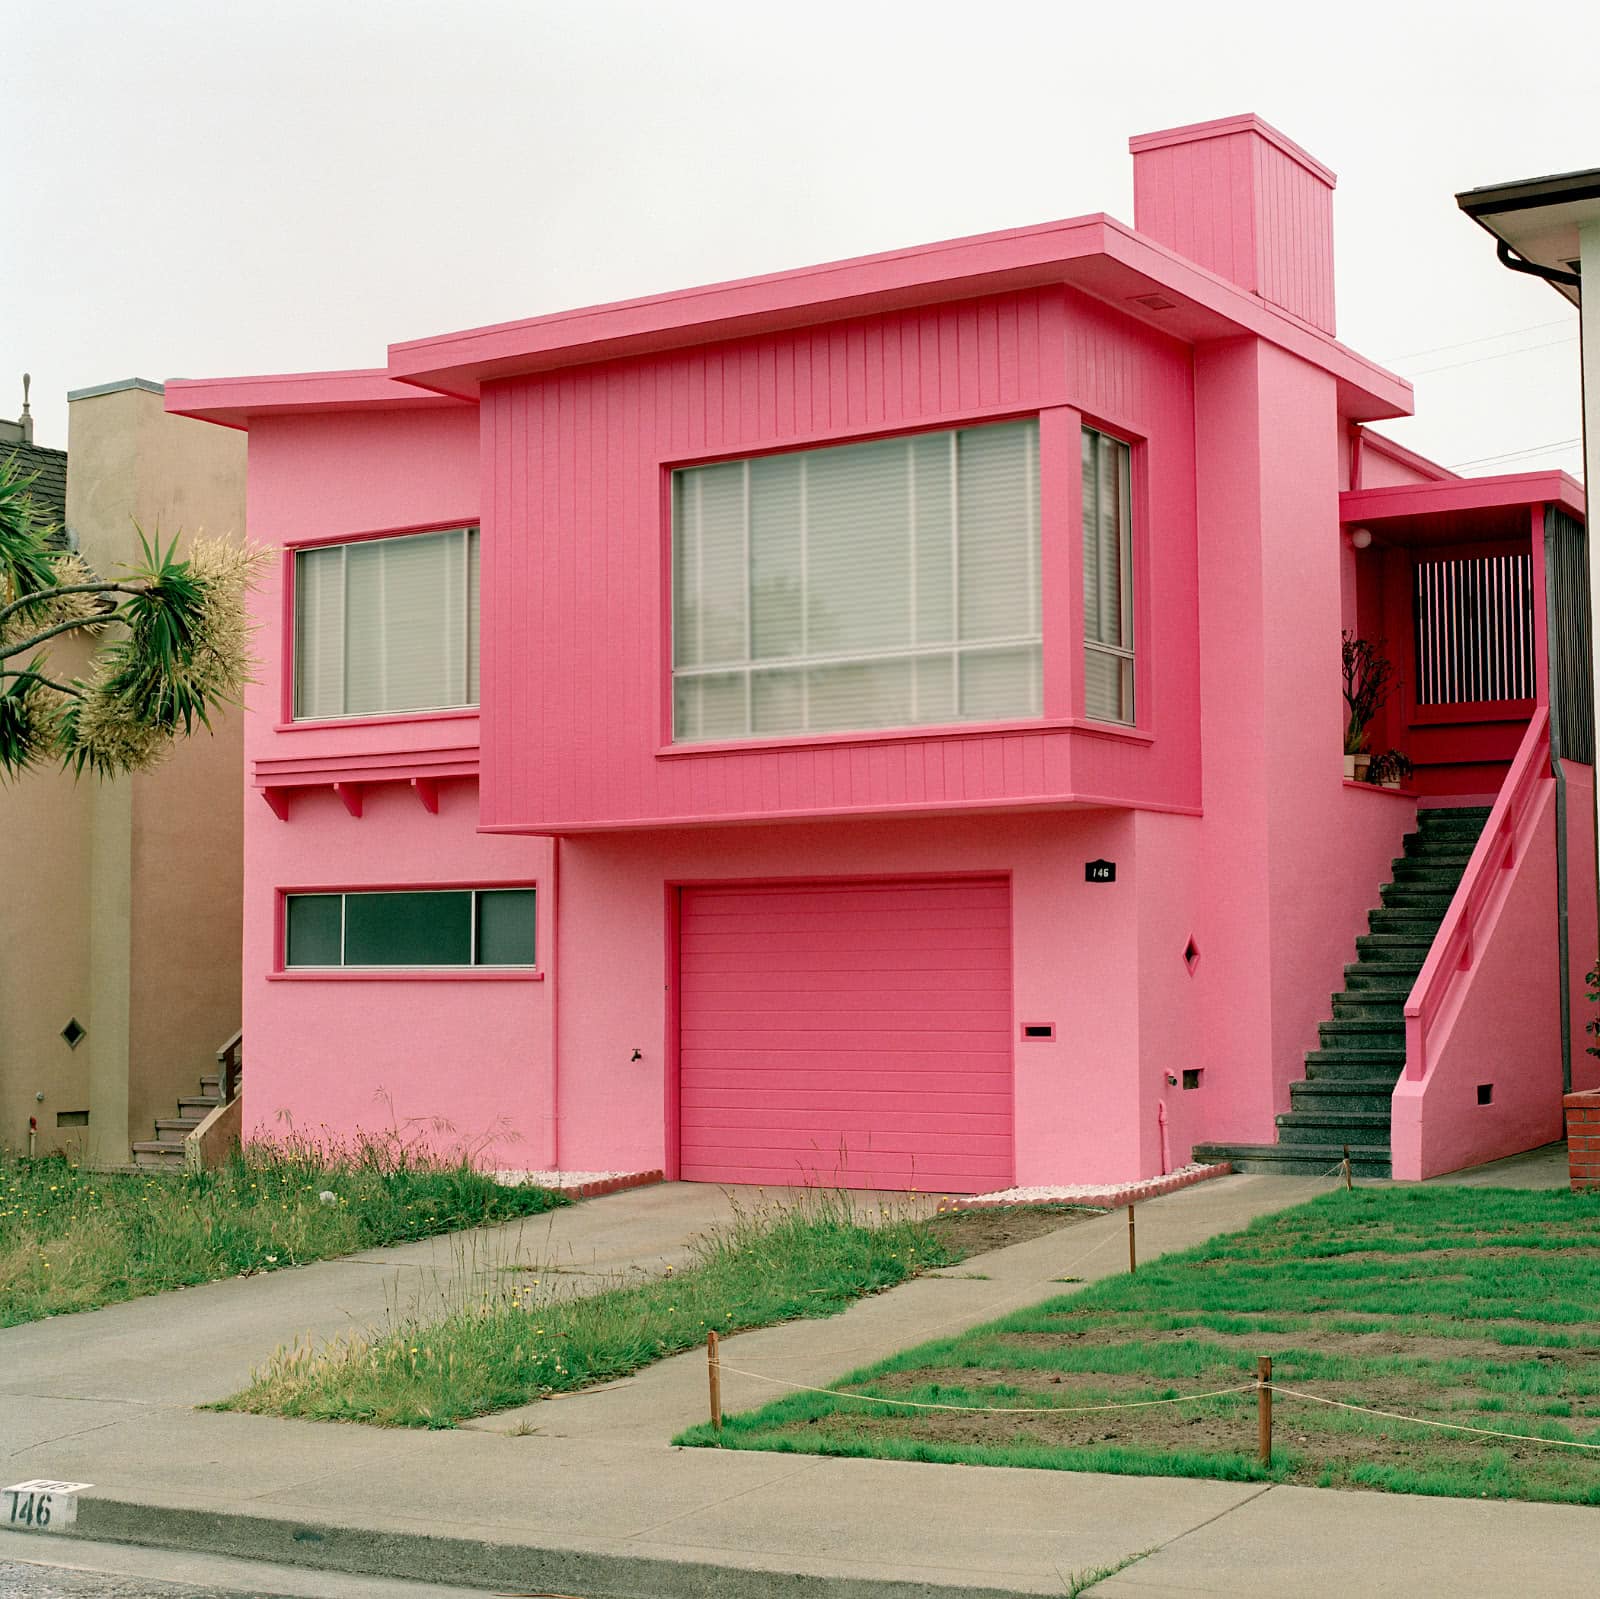 Фото розового дома. Розовый дом. Розовый коттедж. Розовый домик. Розовый дом современный.